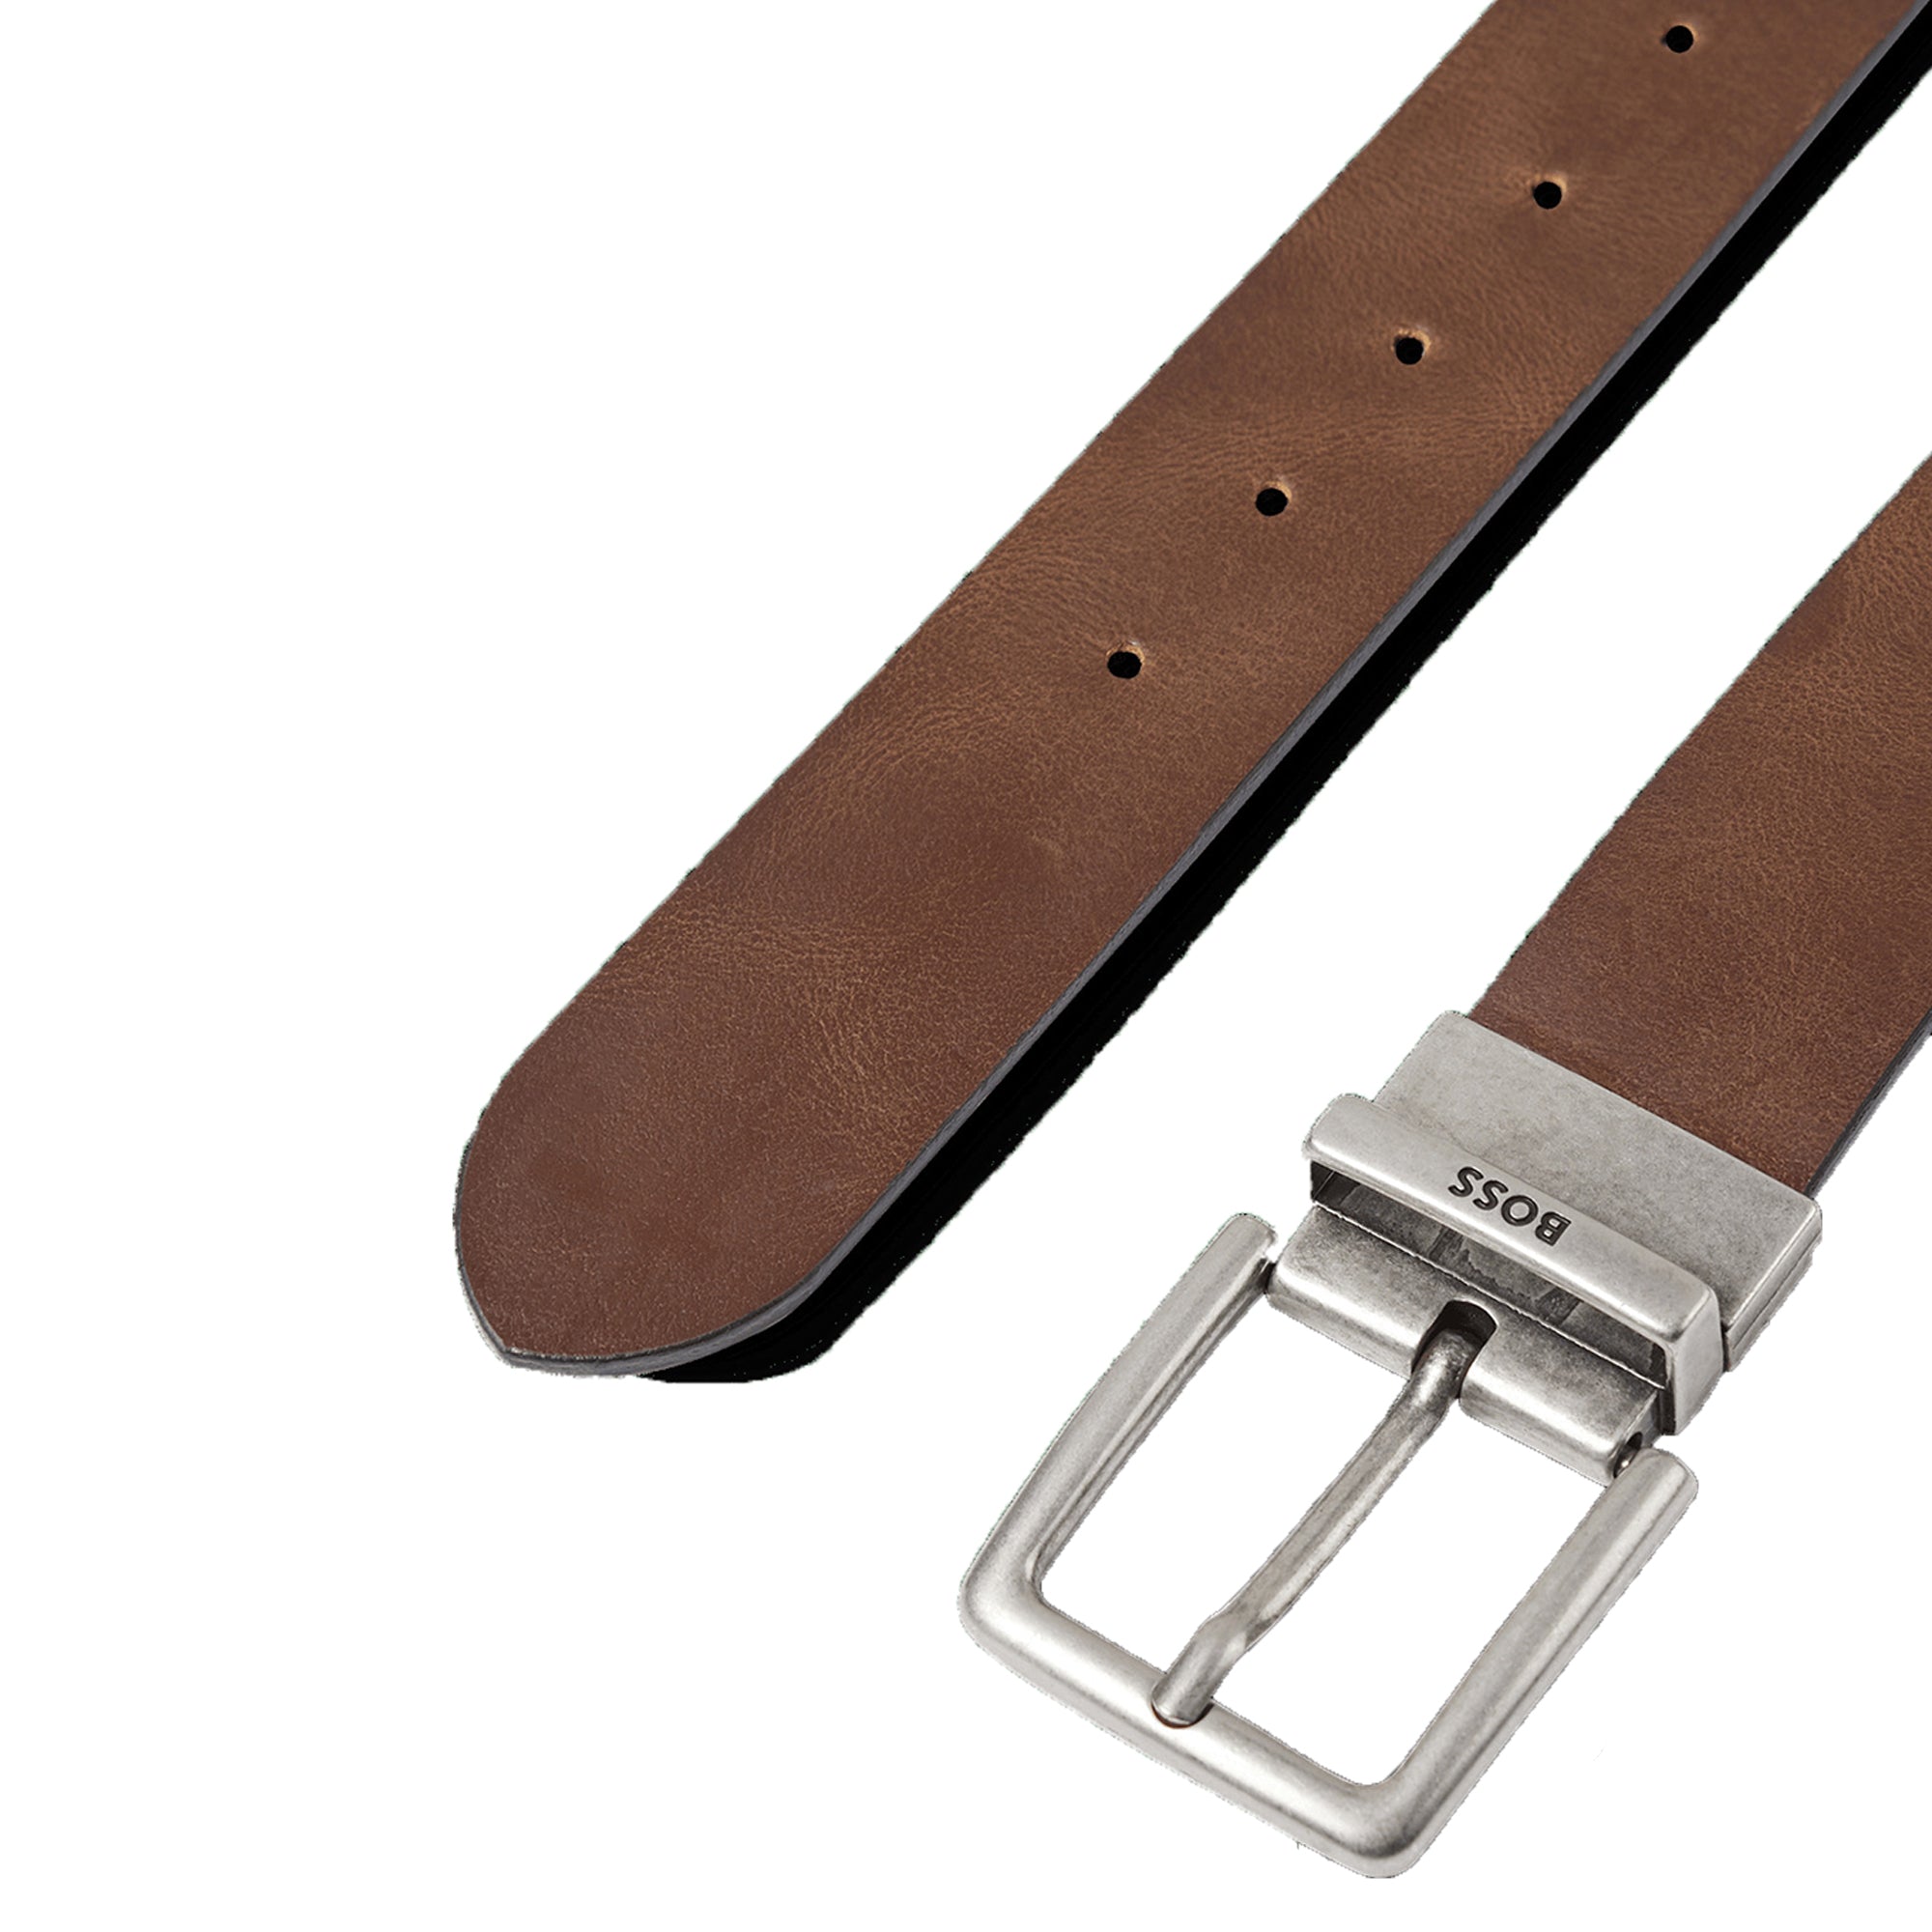 Hugo Boss Mens Classic Leather Belt Brown